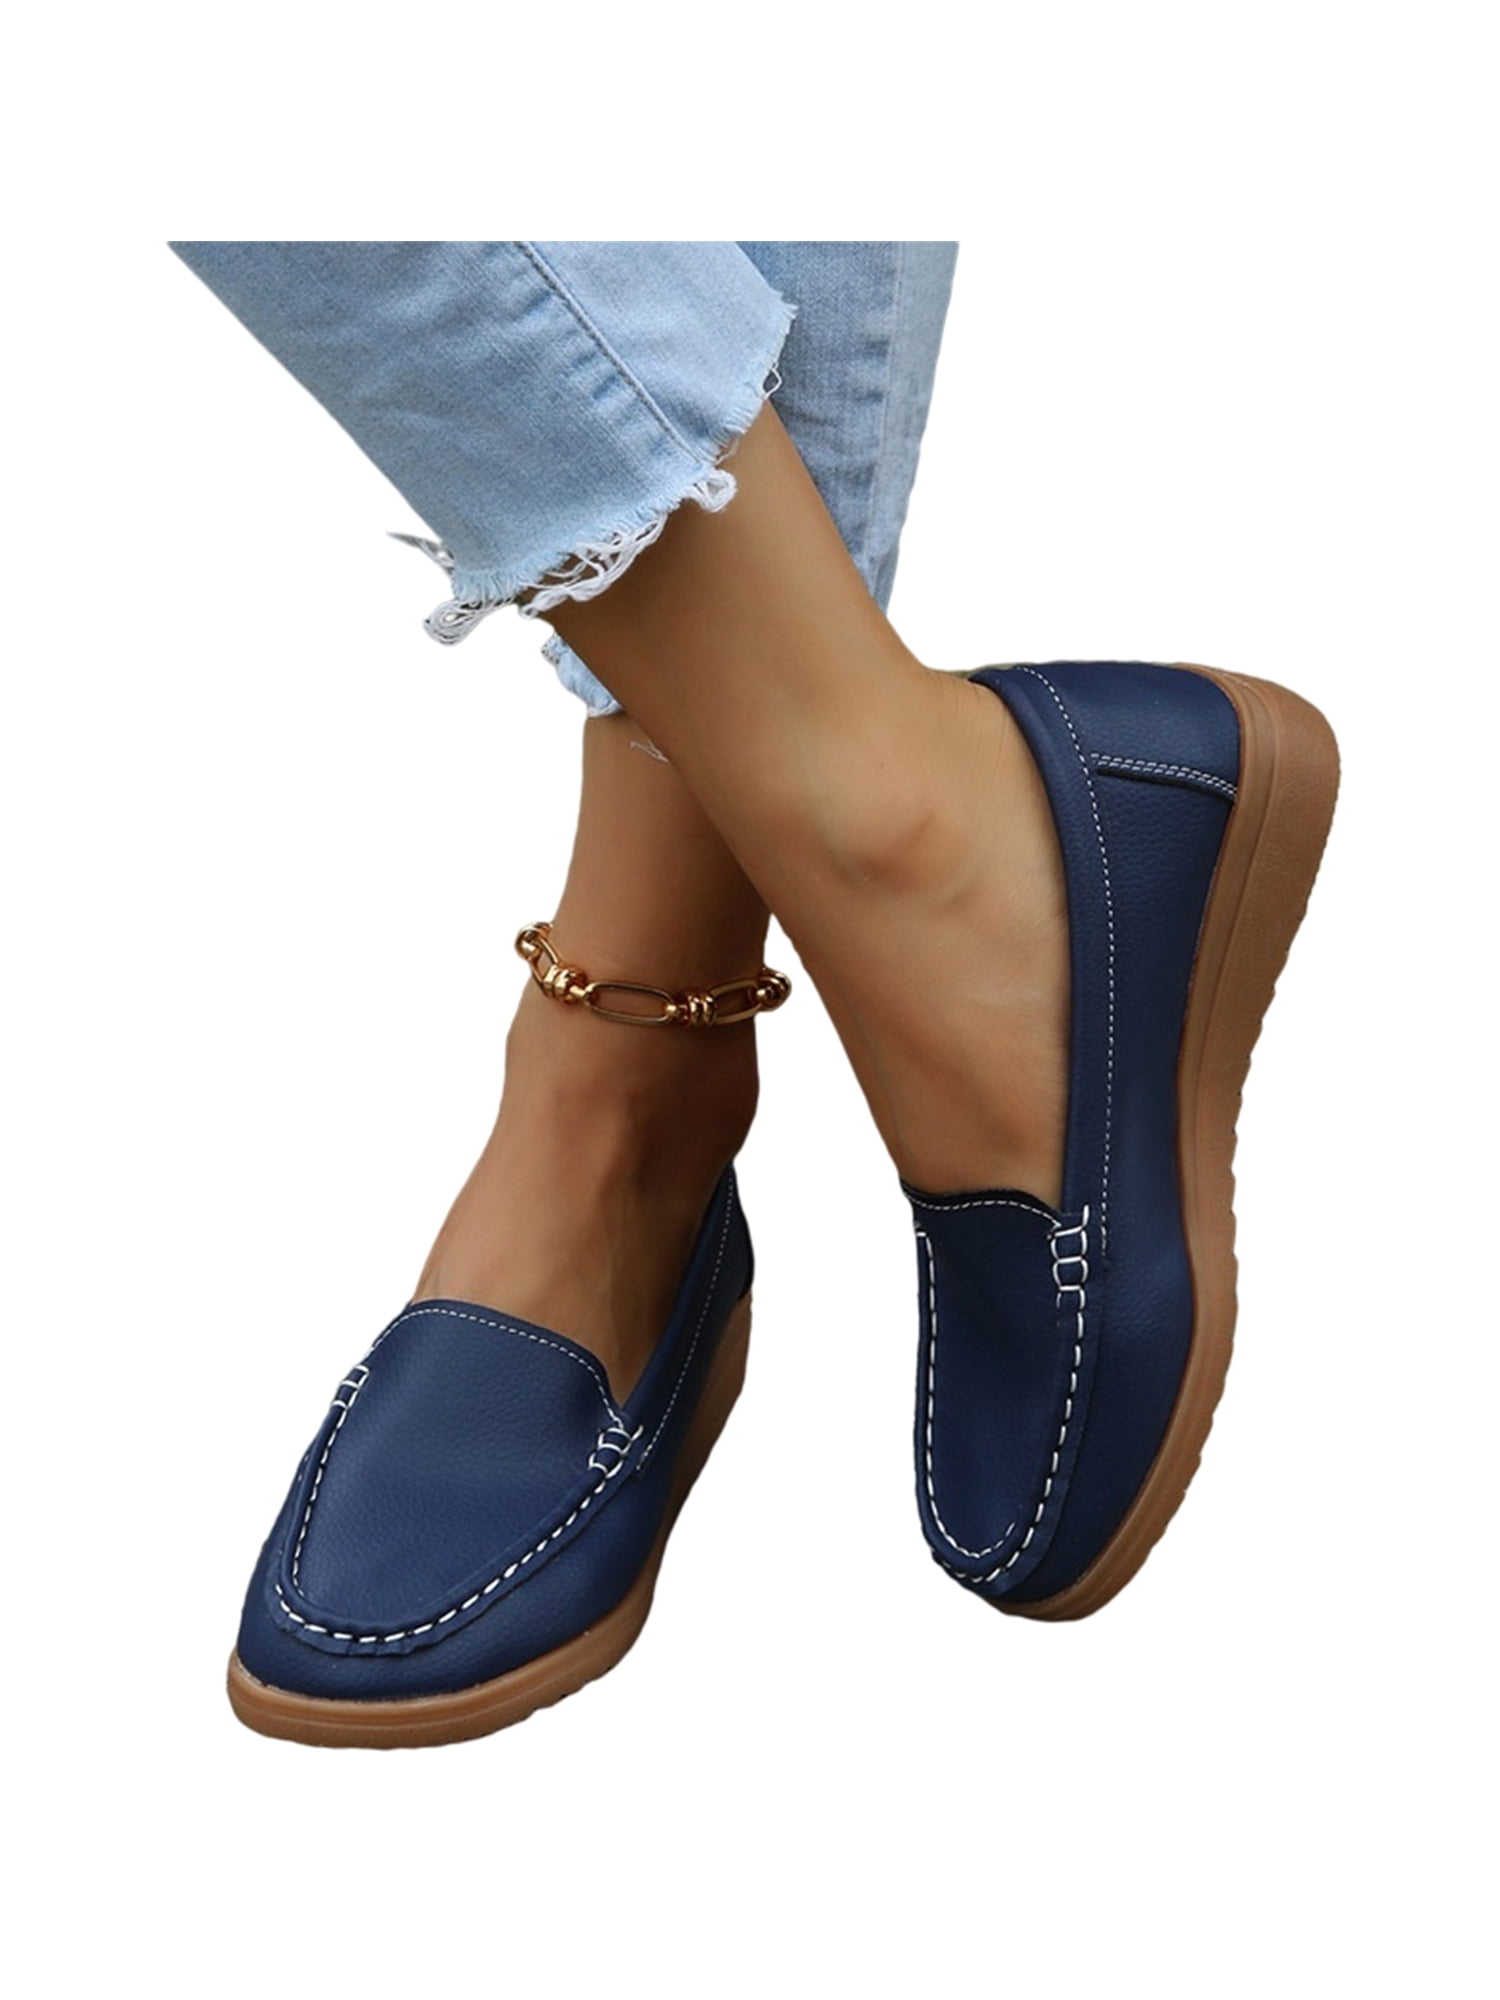 Woobling Women's Penny Loafers Comfy Slip Boat Shoe Casual Walking Work Shoes Size 4.5-8.5 Blue 5.5 - Walmart.com